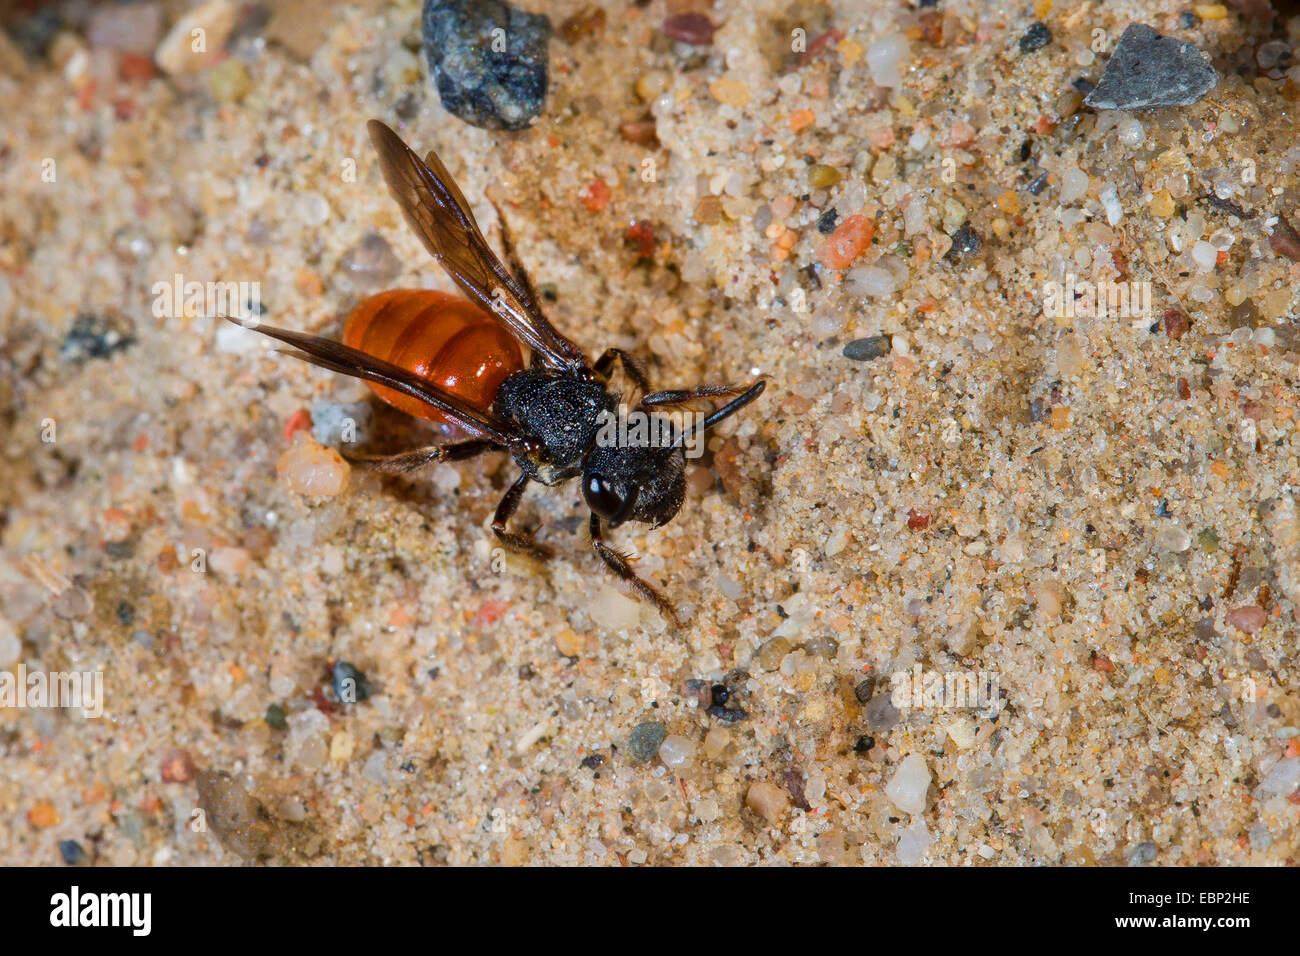 Sweat bee, Halictid Bee (Sphecodes albilabris, Sphecodes fuscipennis), on sandy ground, Germany Stock Photo